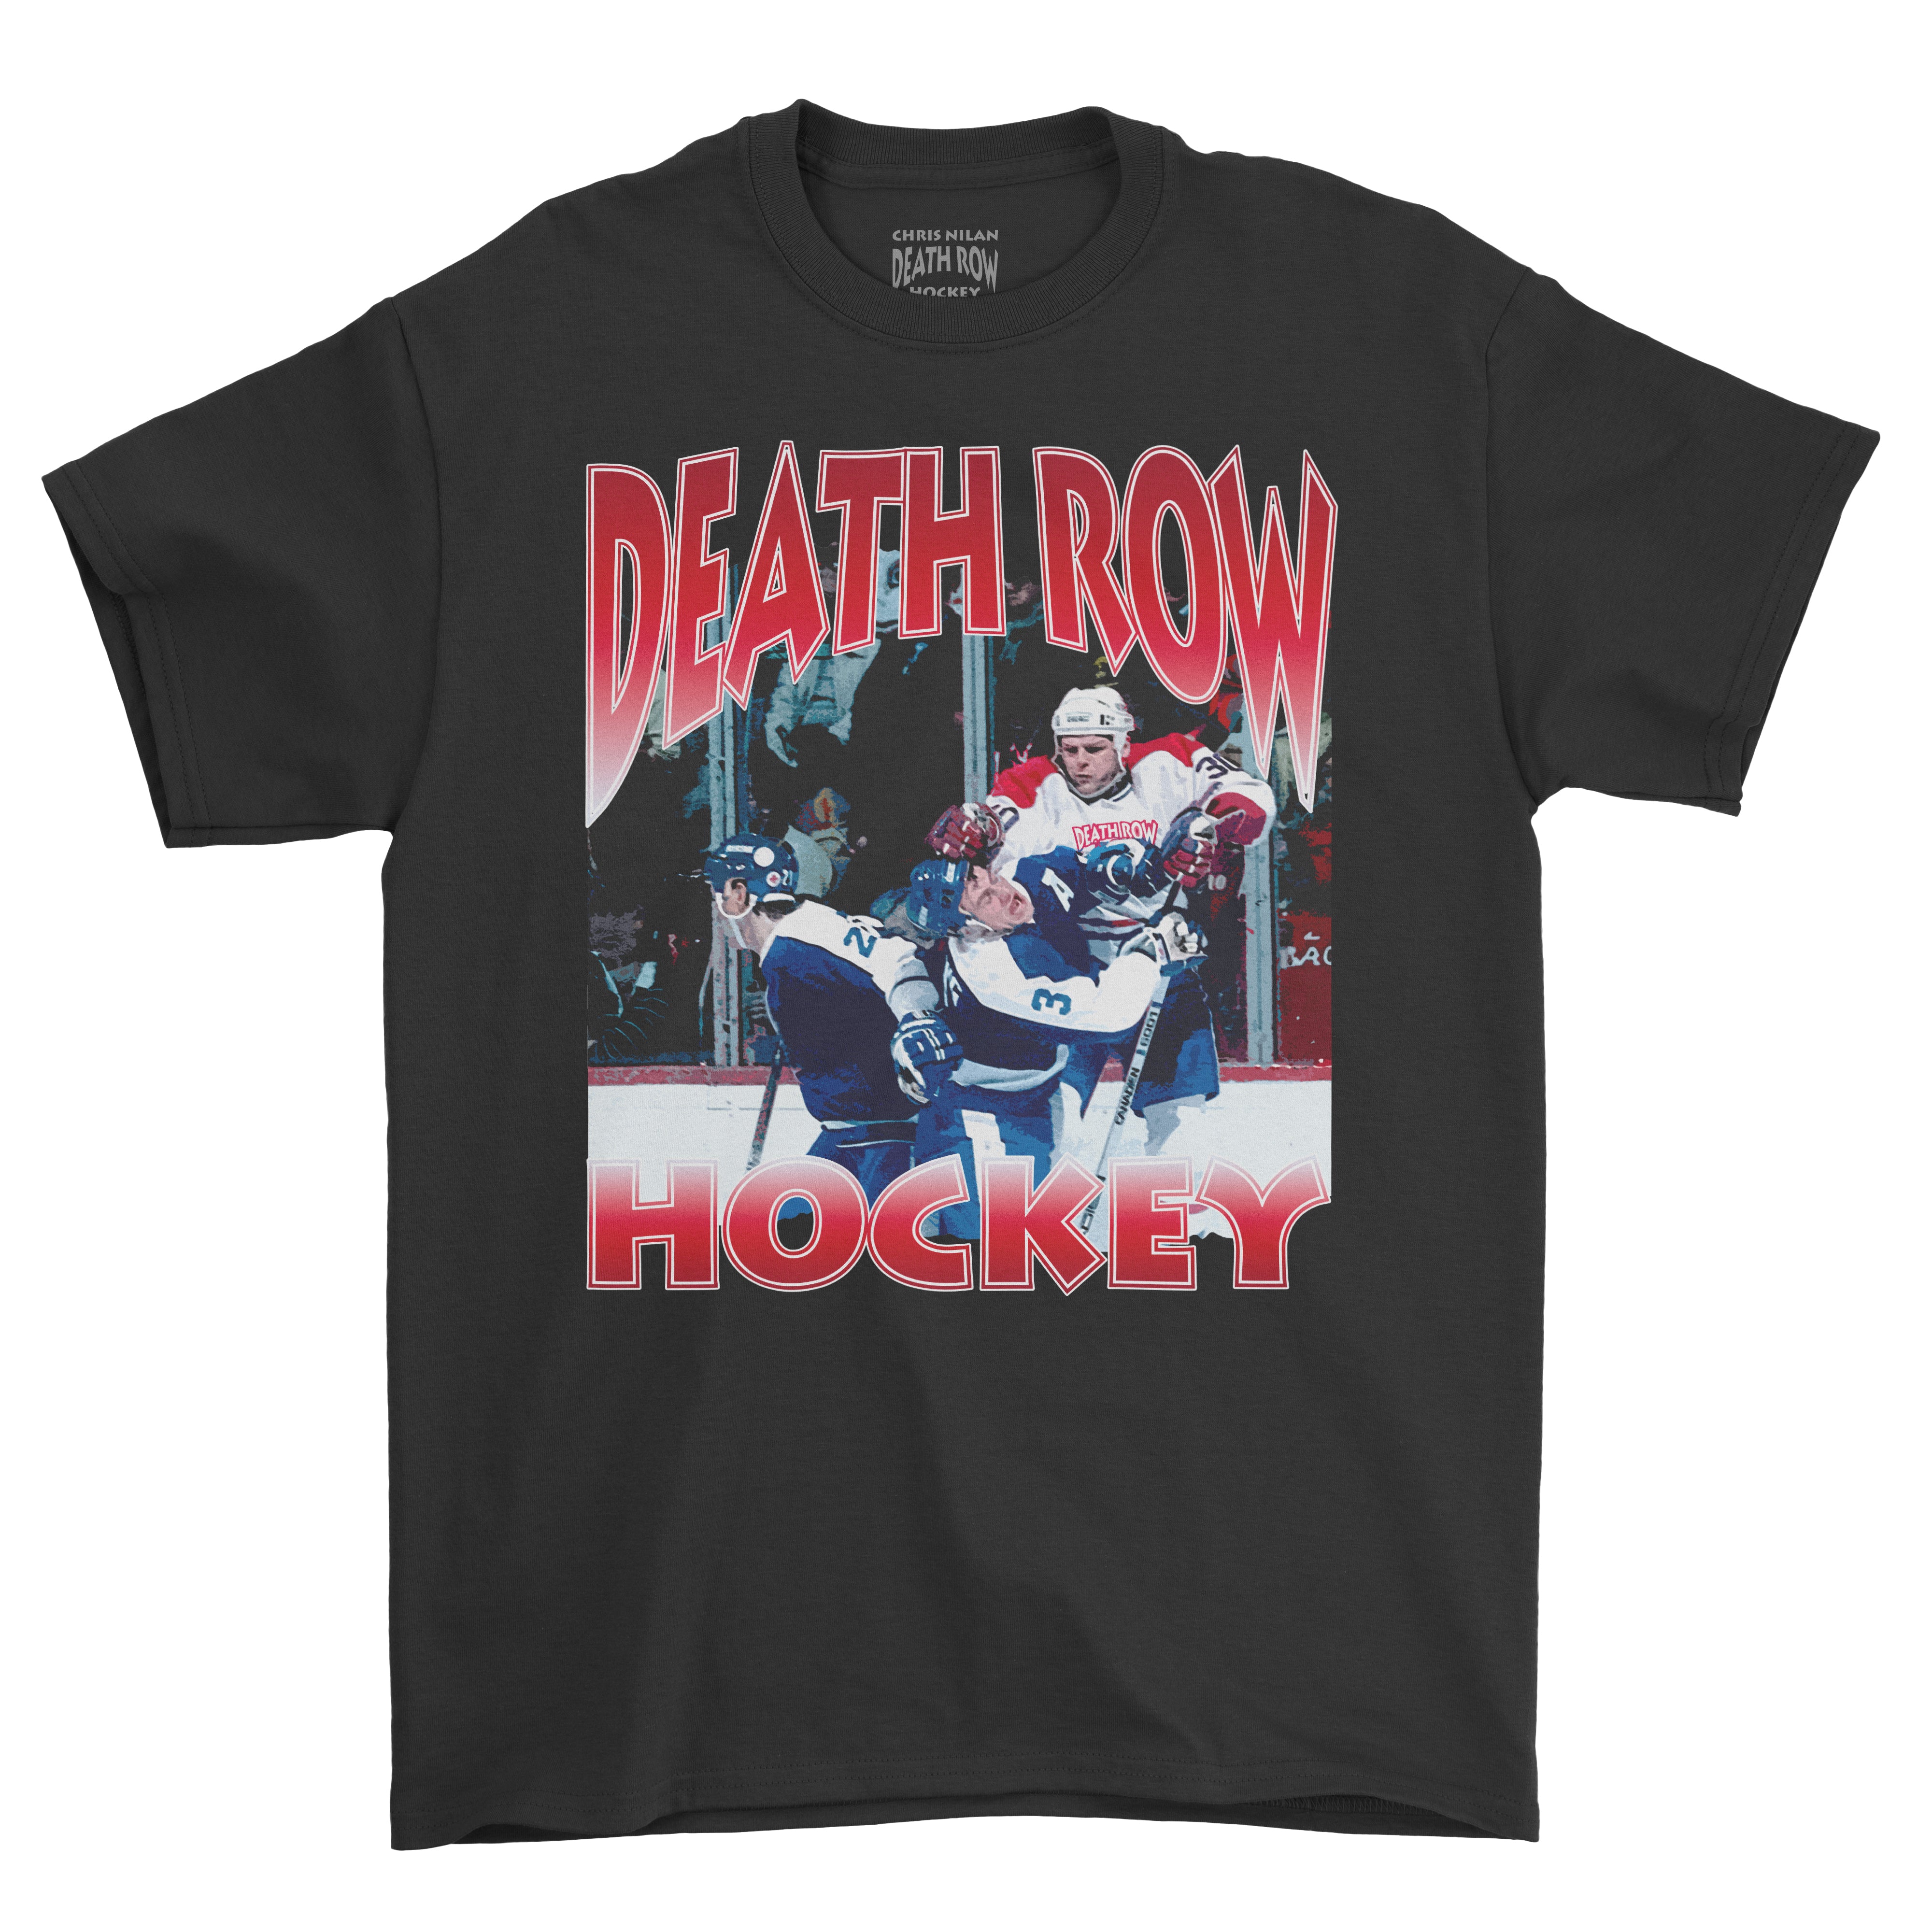 Chris Nilan x Death Row Hockey Tee